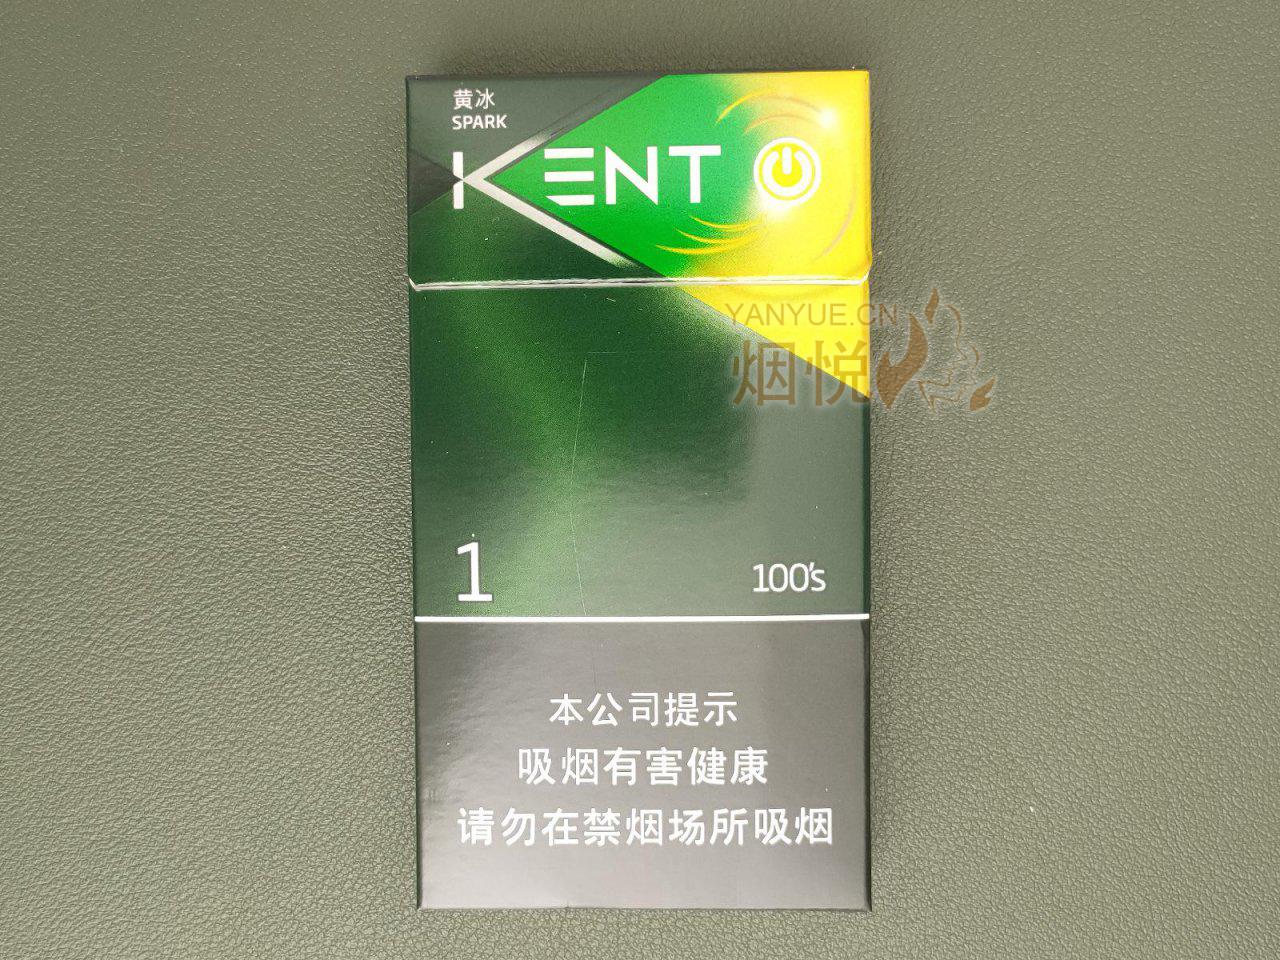 KENT(健牌)香烟价格表和图片_KENT(健牌)多少钱一包_一盒_一条